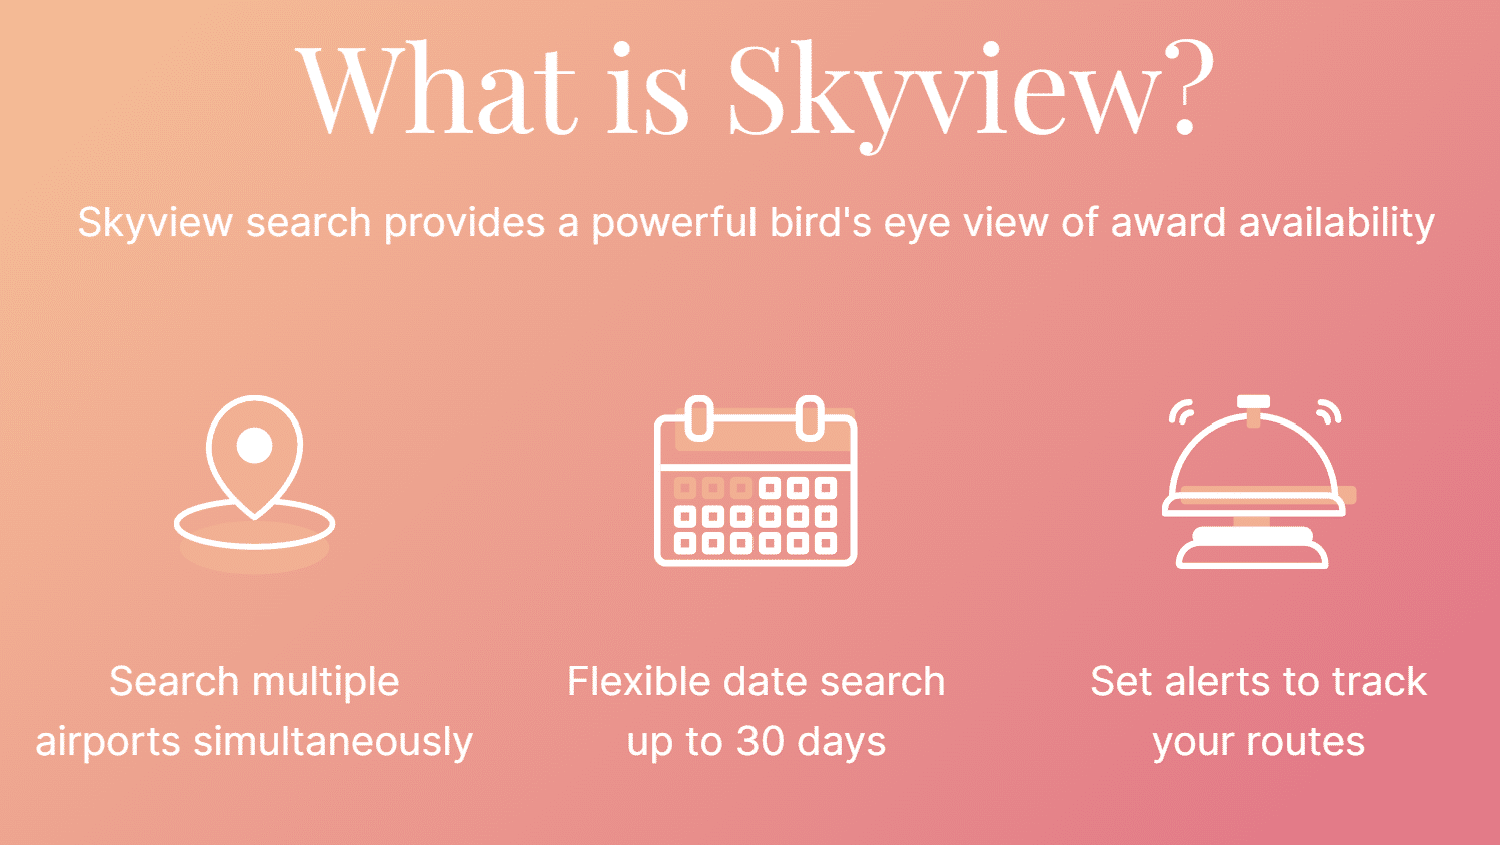 Roame Travel's Skyview explained.